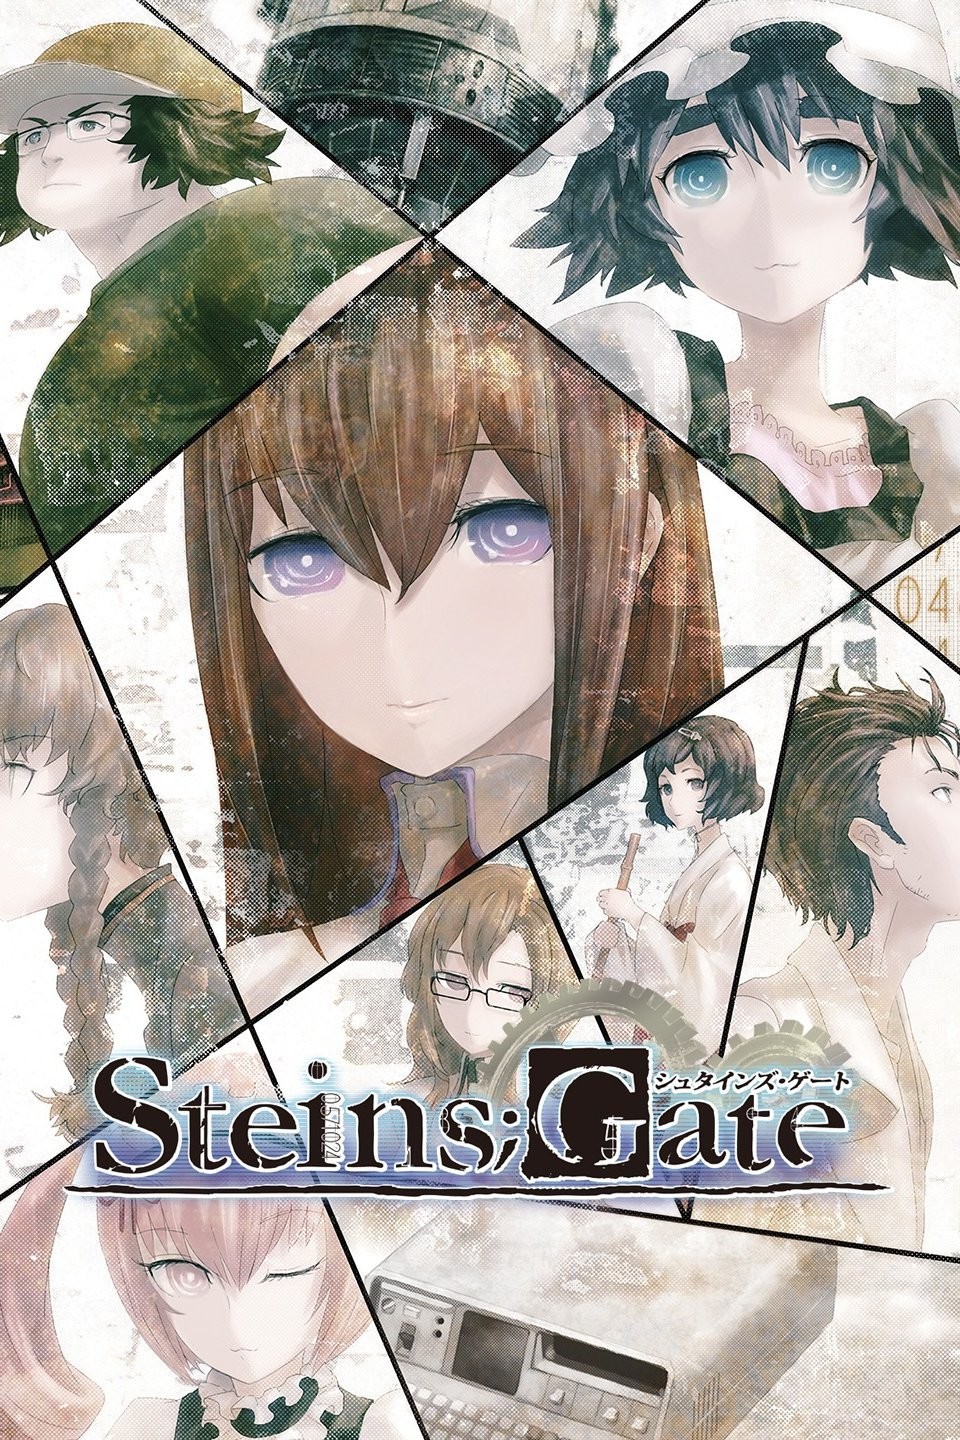 GATE Anime Novel Series Wallpaper HD 109718 - Baltana-demhanvico.com.vn